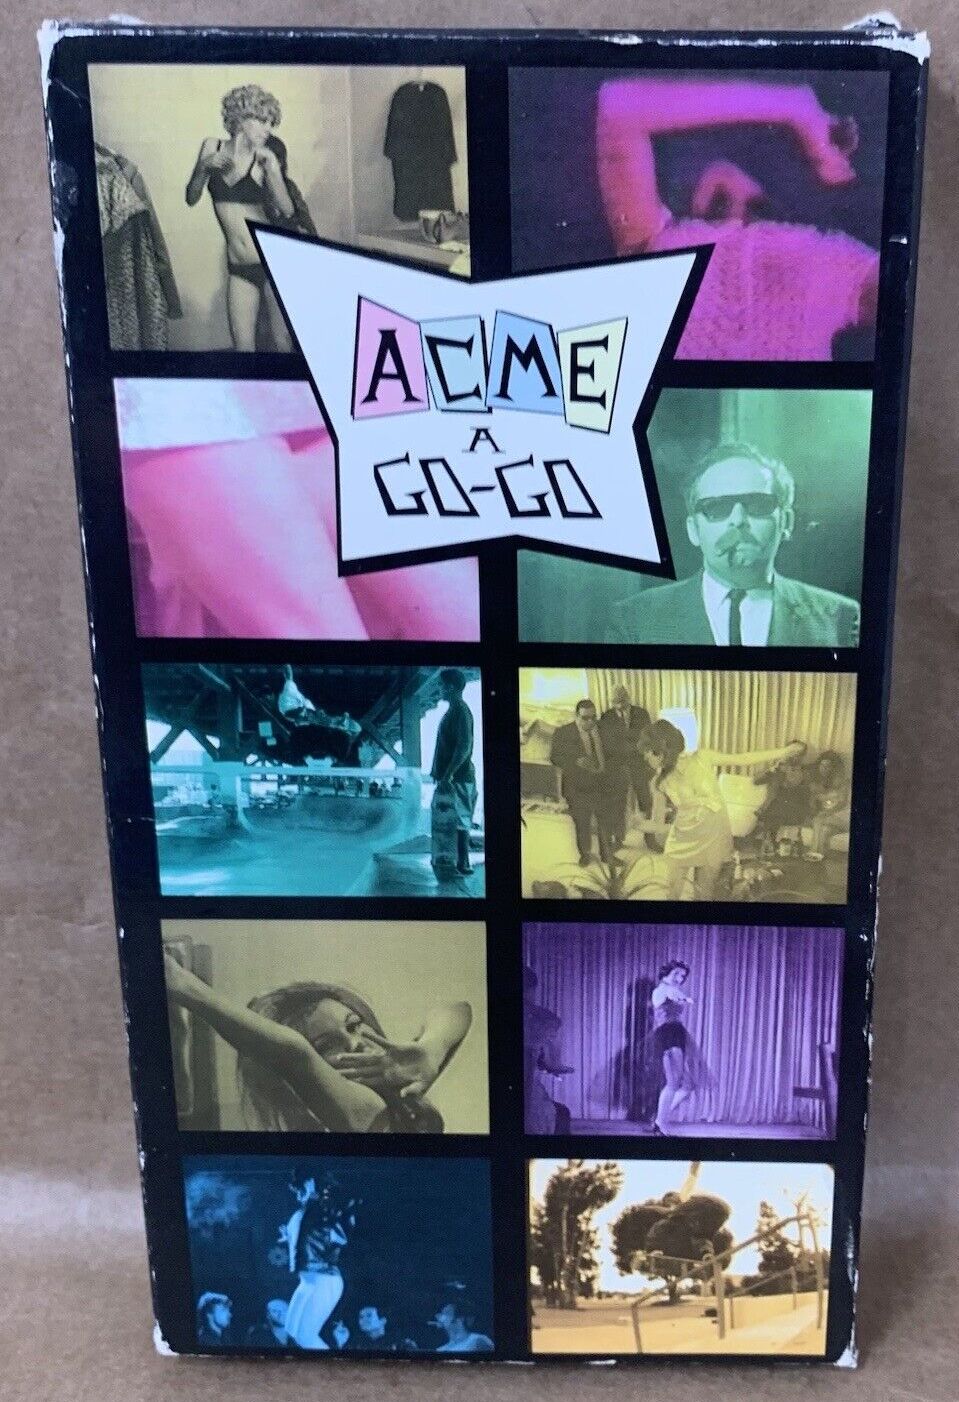 Acme - A Go-Go cover